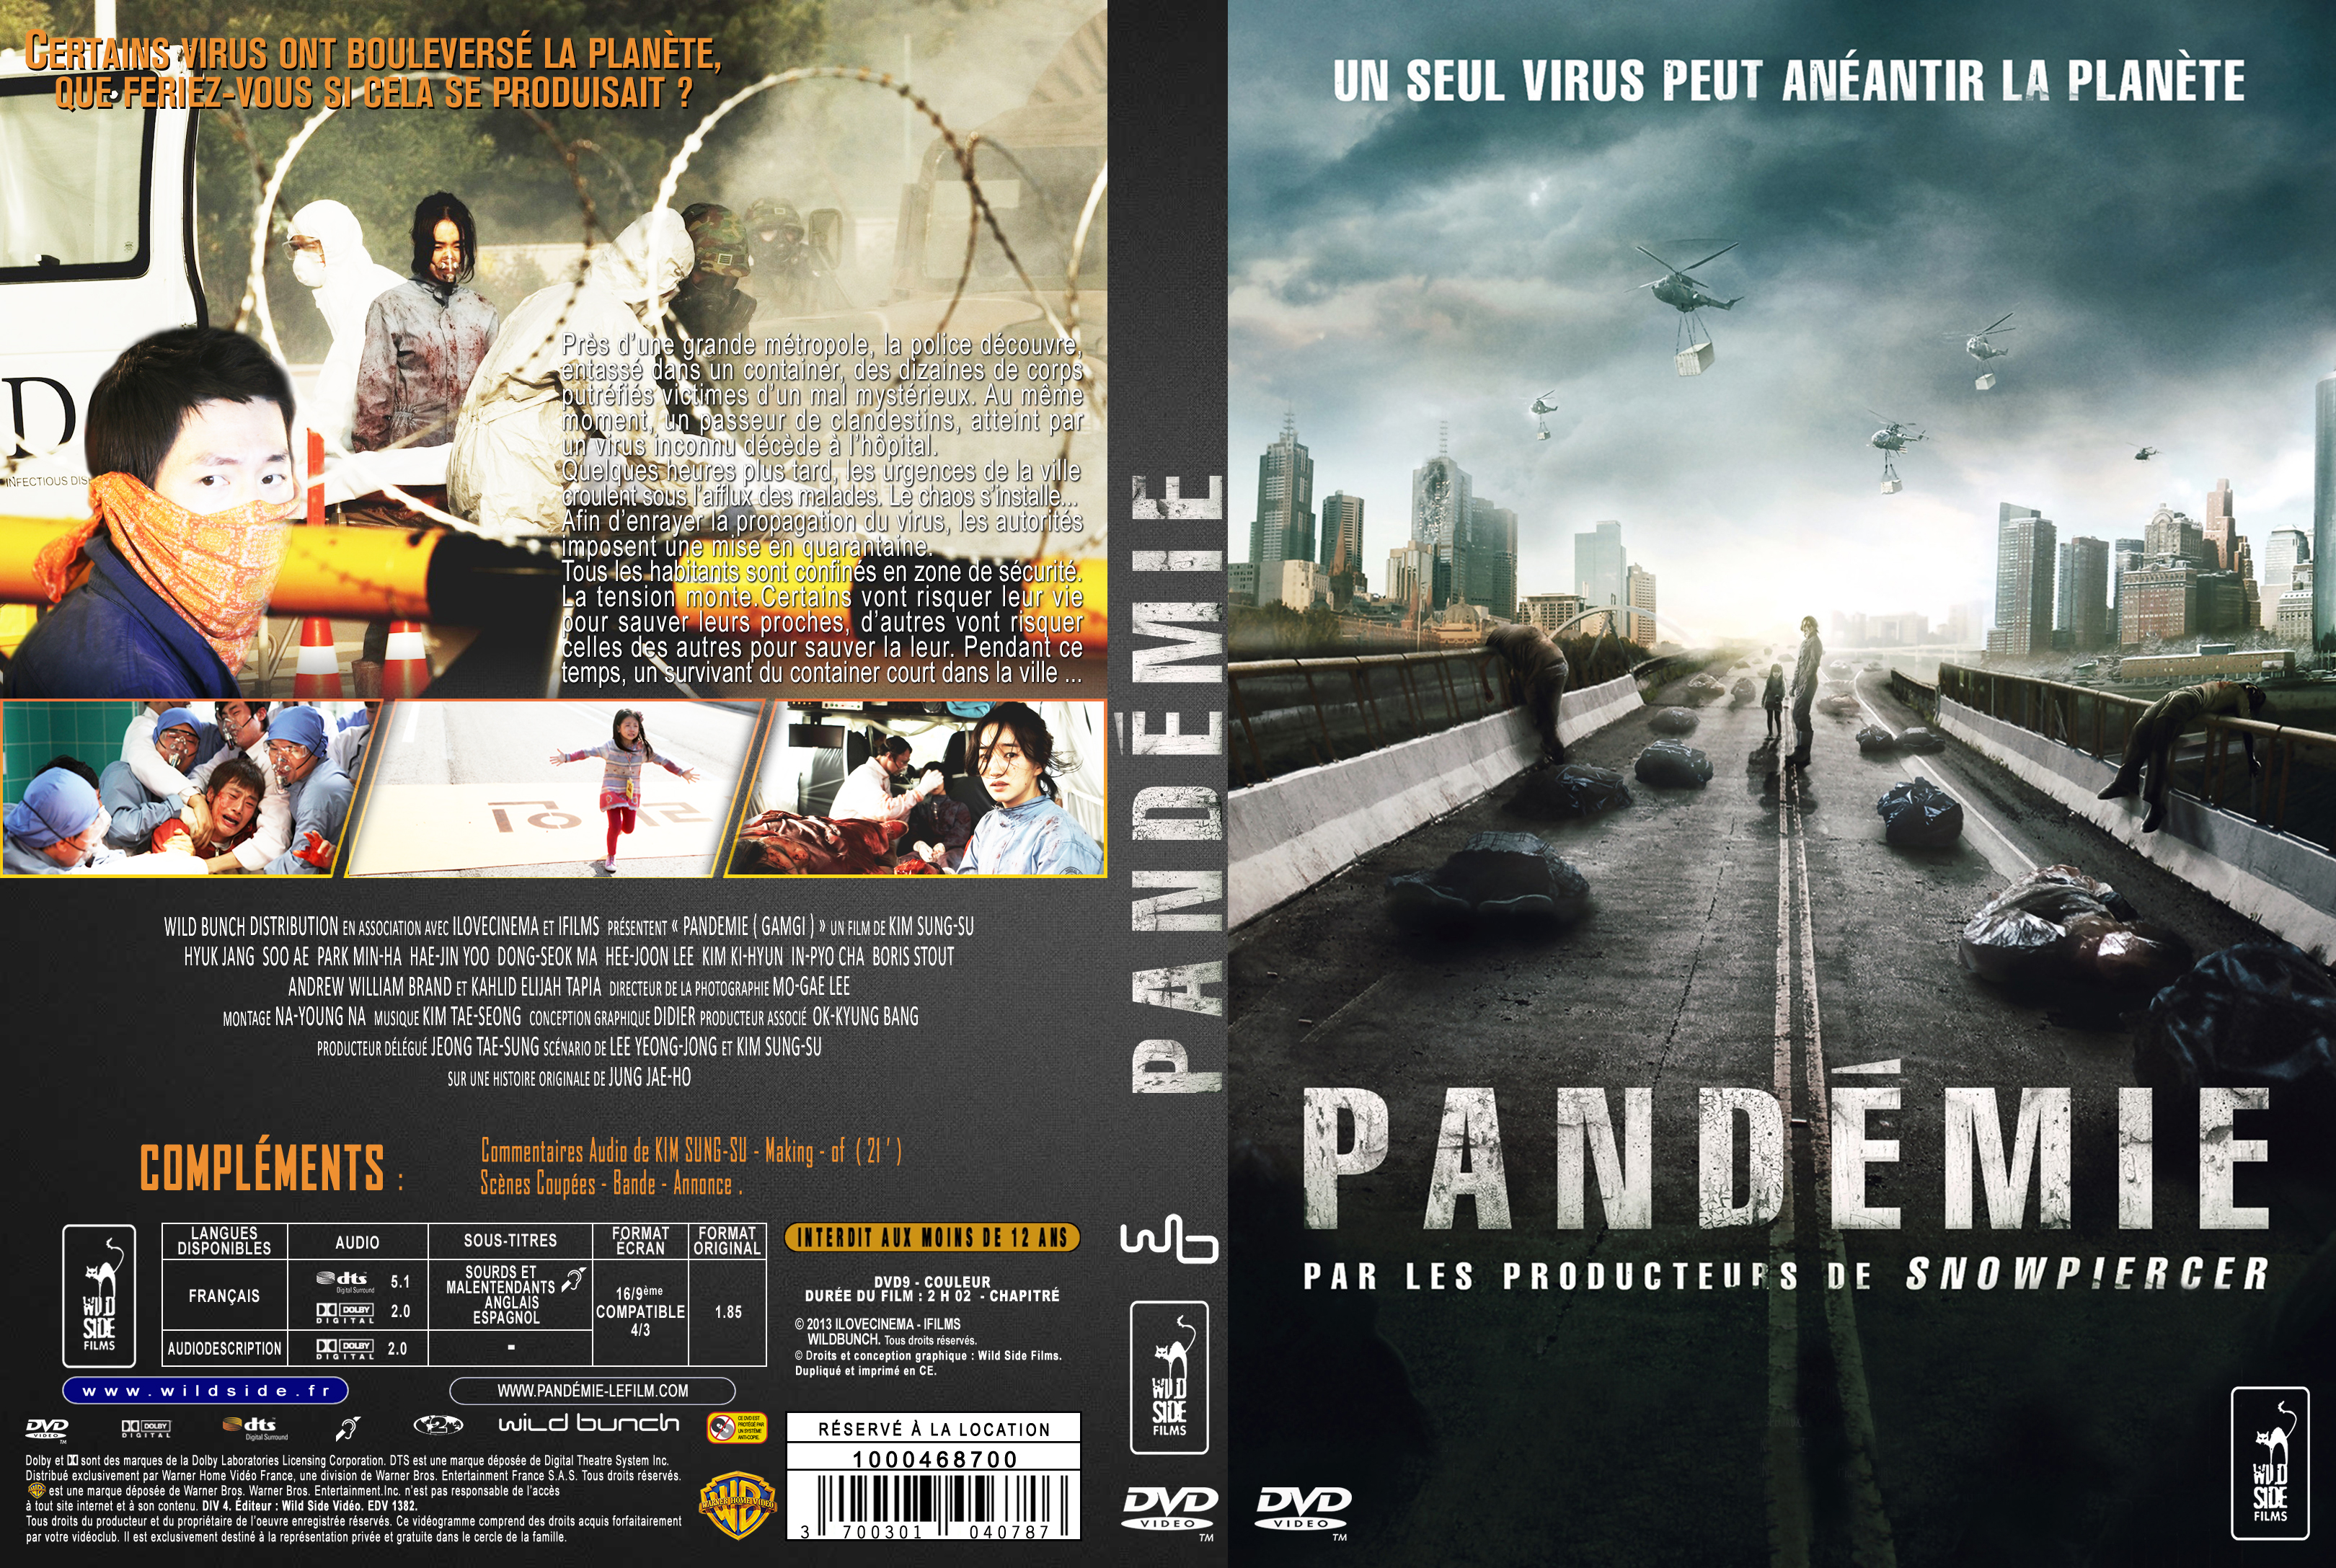 Jaquette DVD Pandmie custom